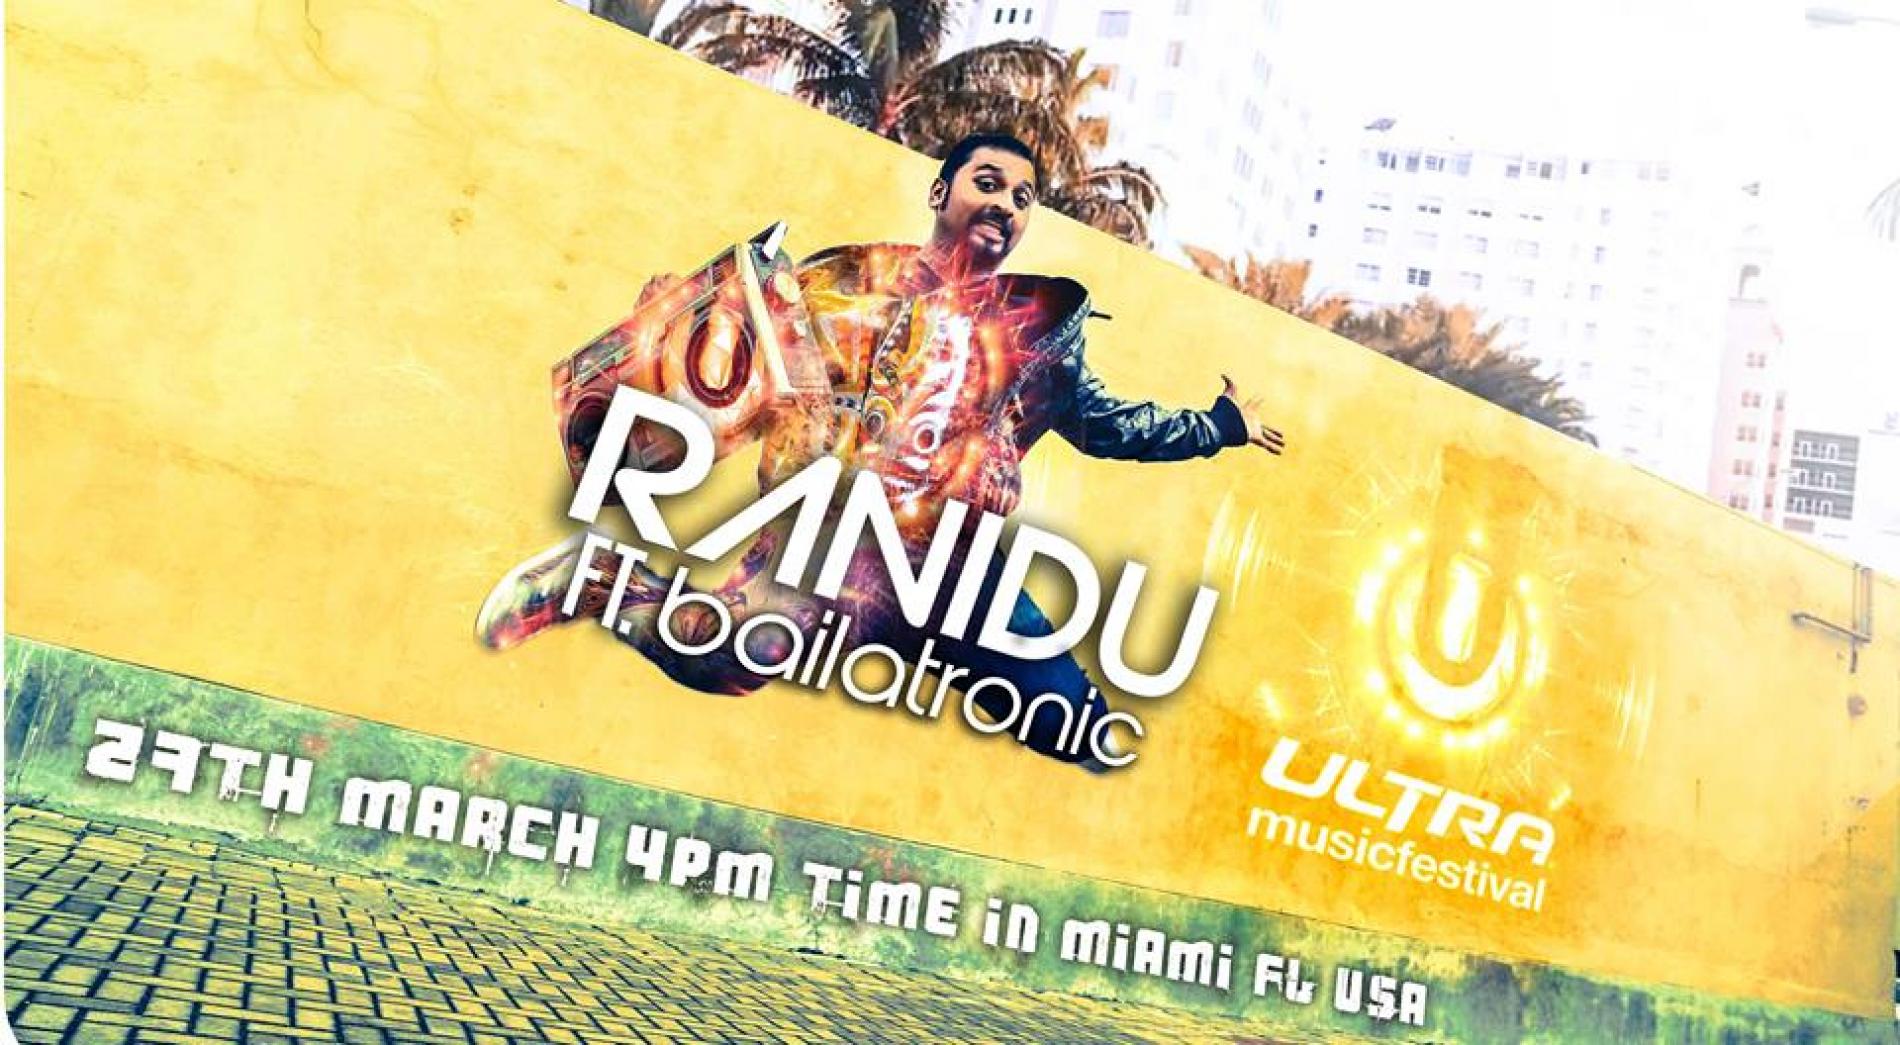 Ranidu Is On The Ultra Music Festival Bill Again